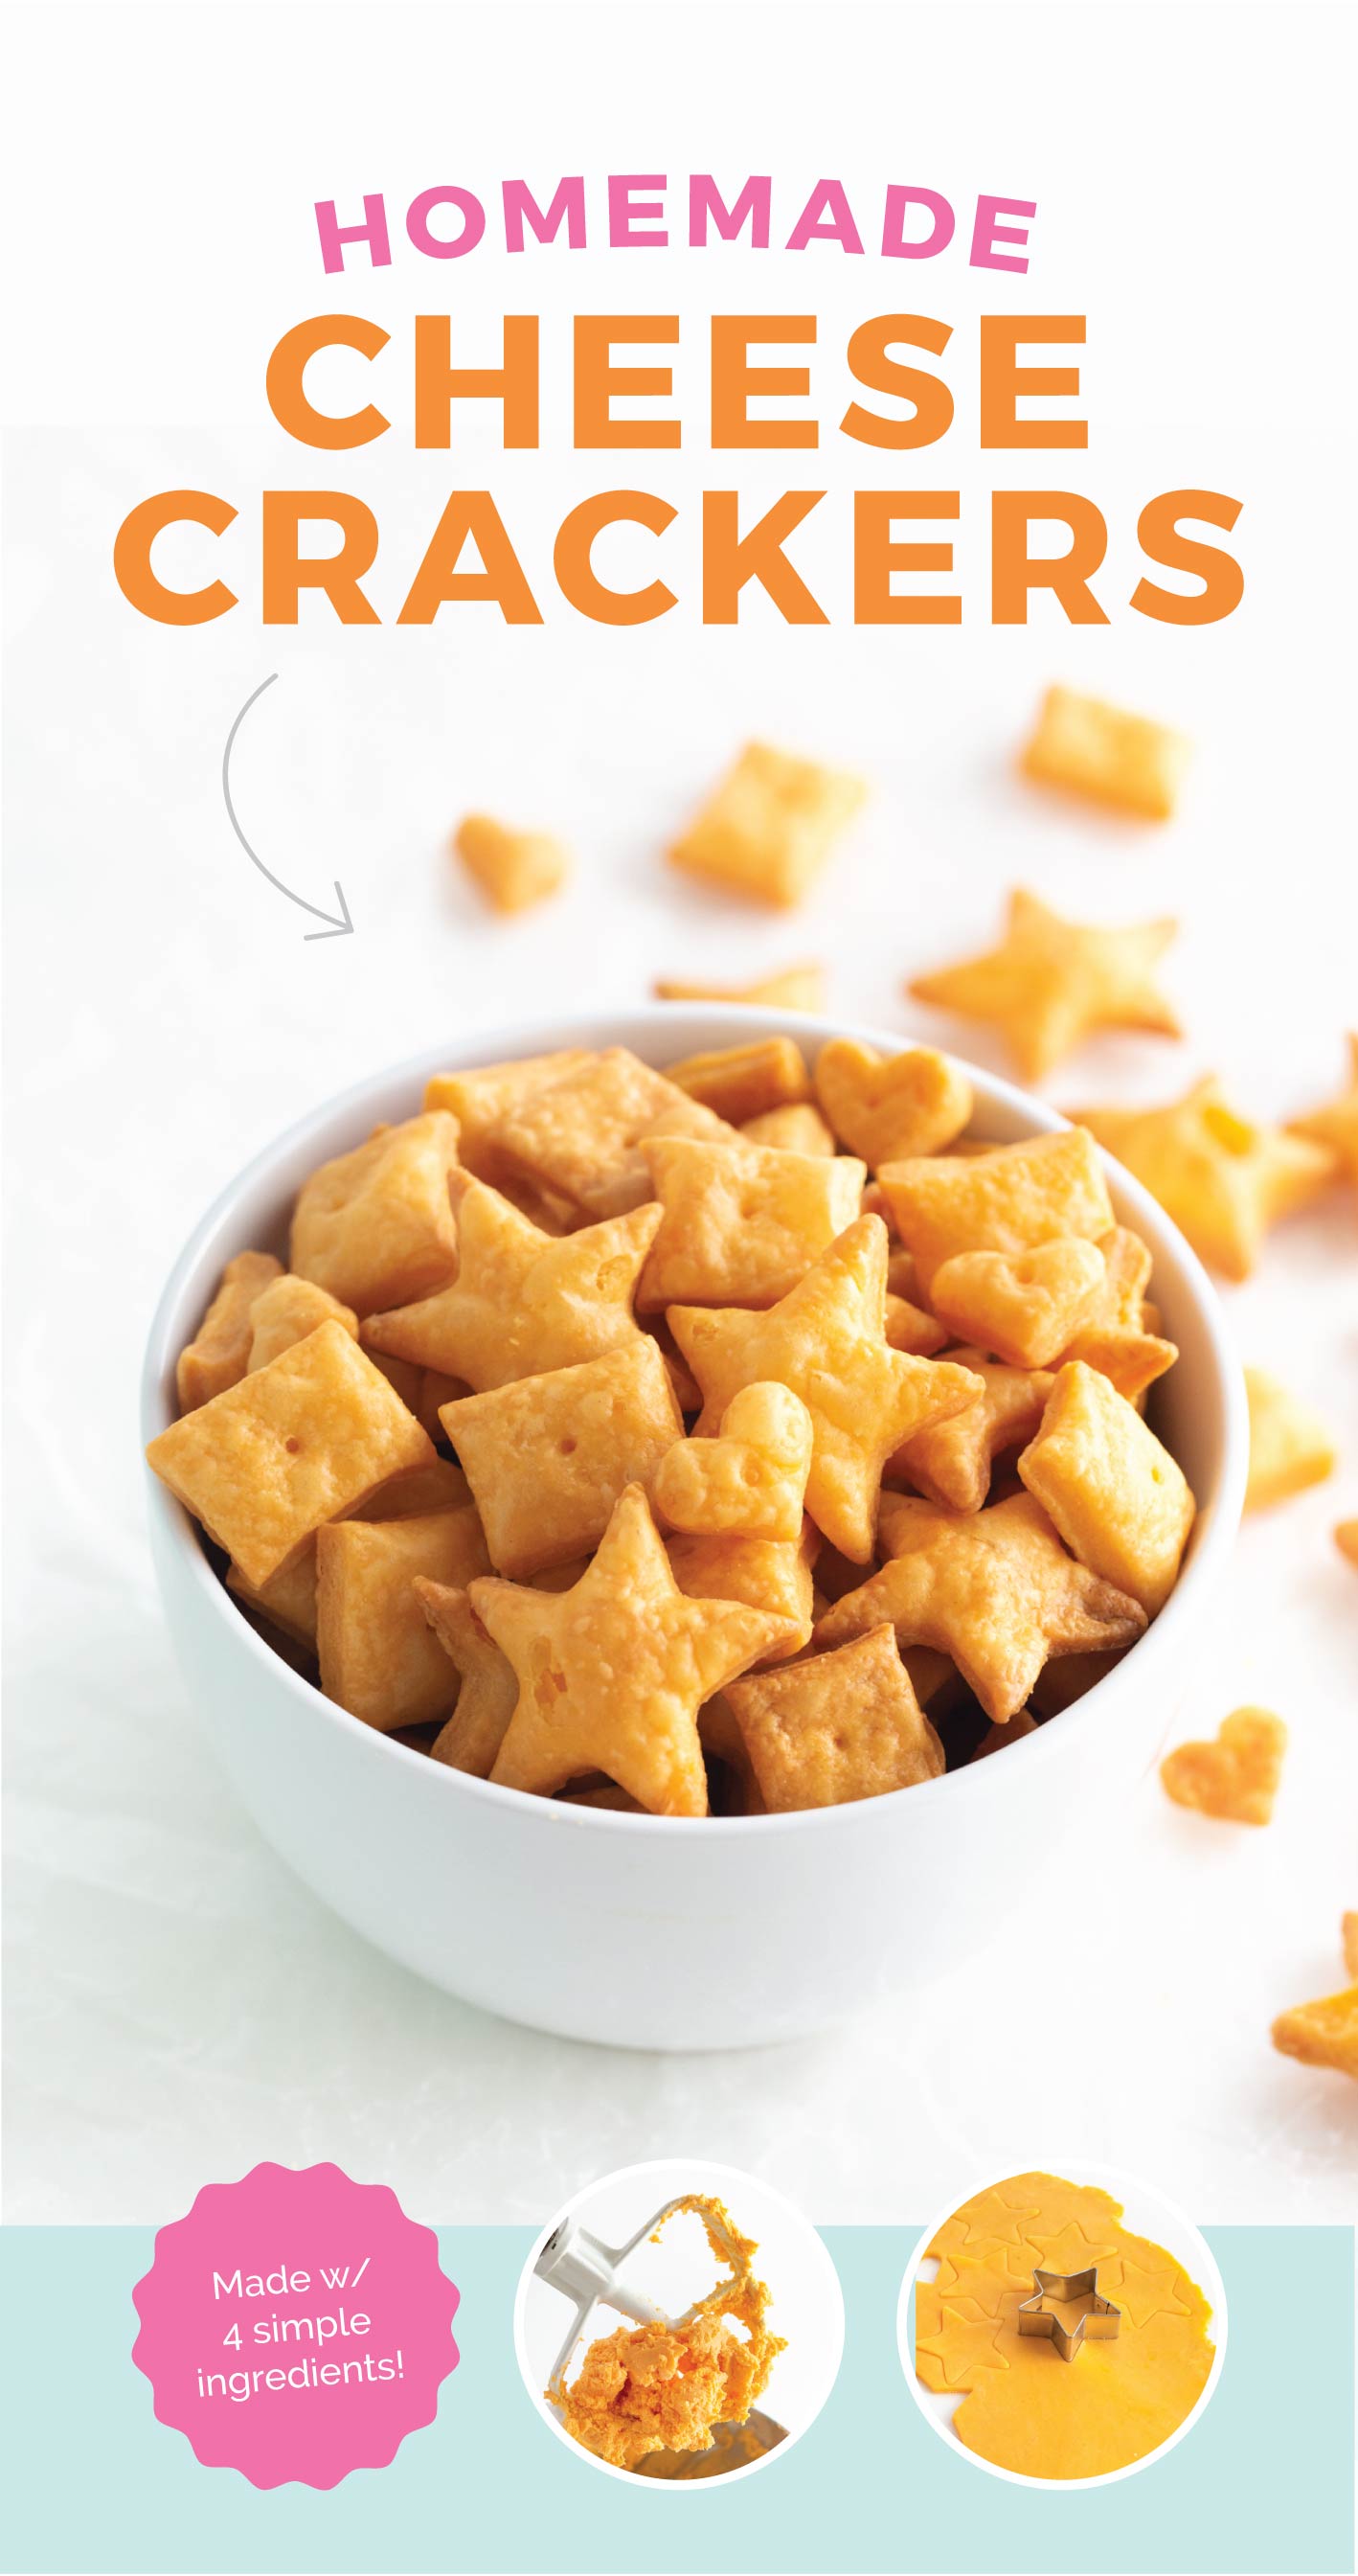 Homemade cheese crackers using 4 simple ingredients!